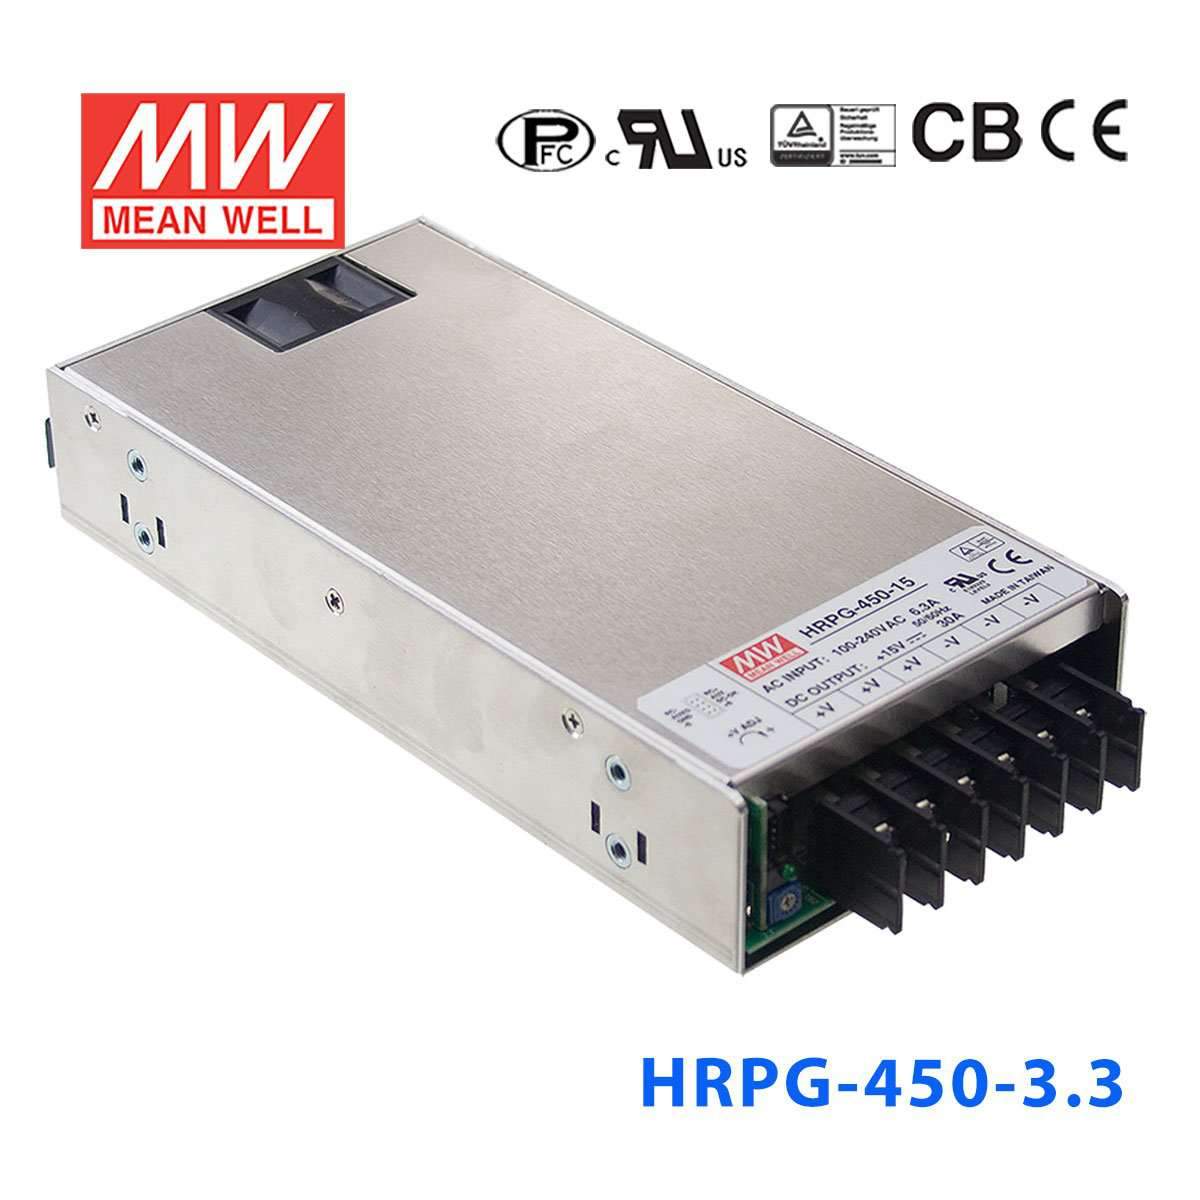 Mean Well HRPG-450-3.3  Power Supply 297W 3.3V